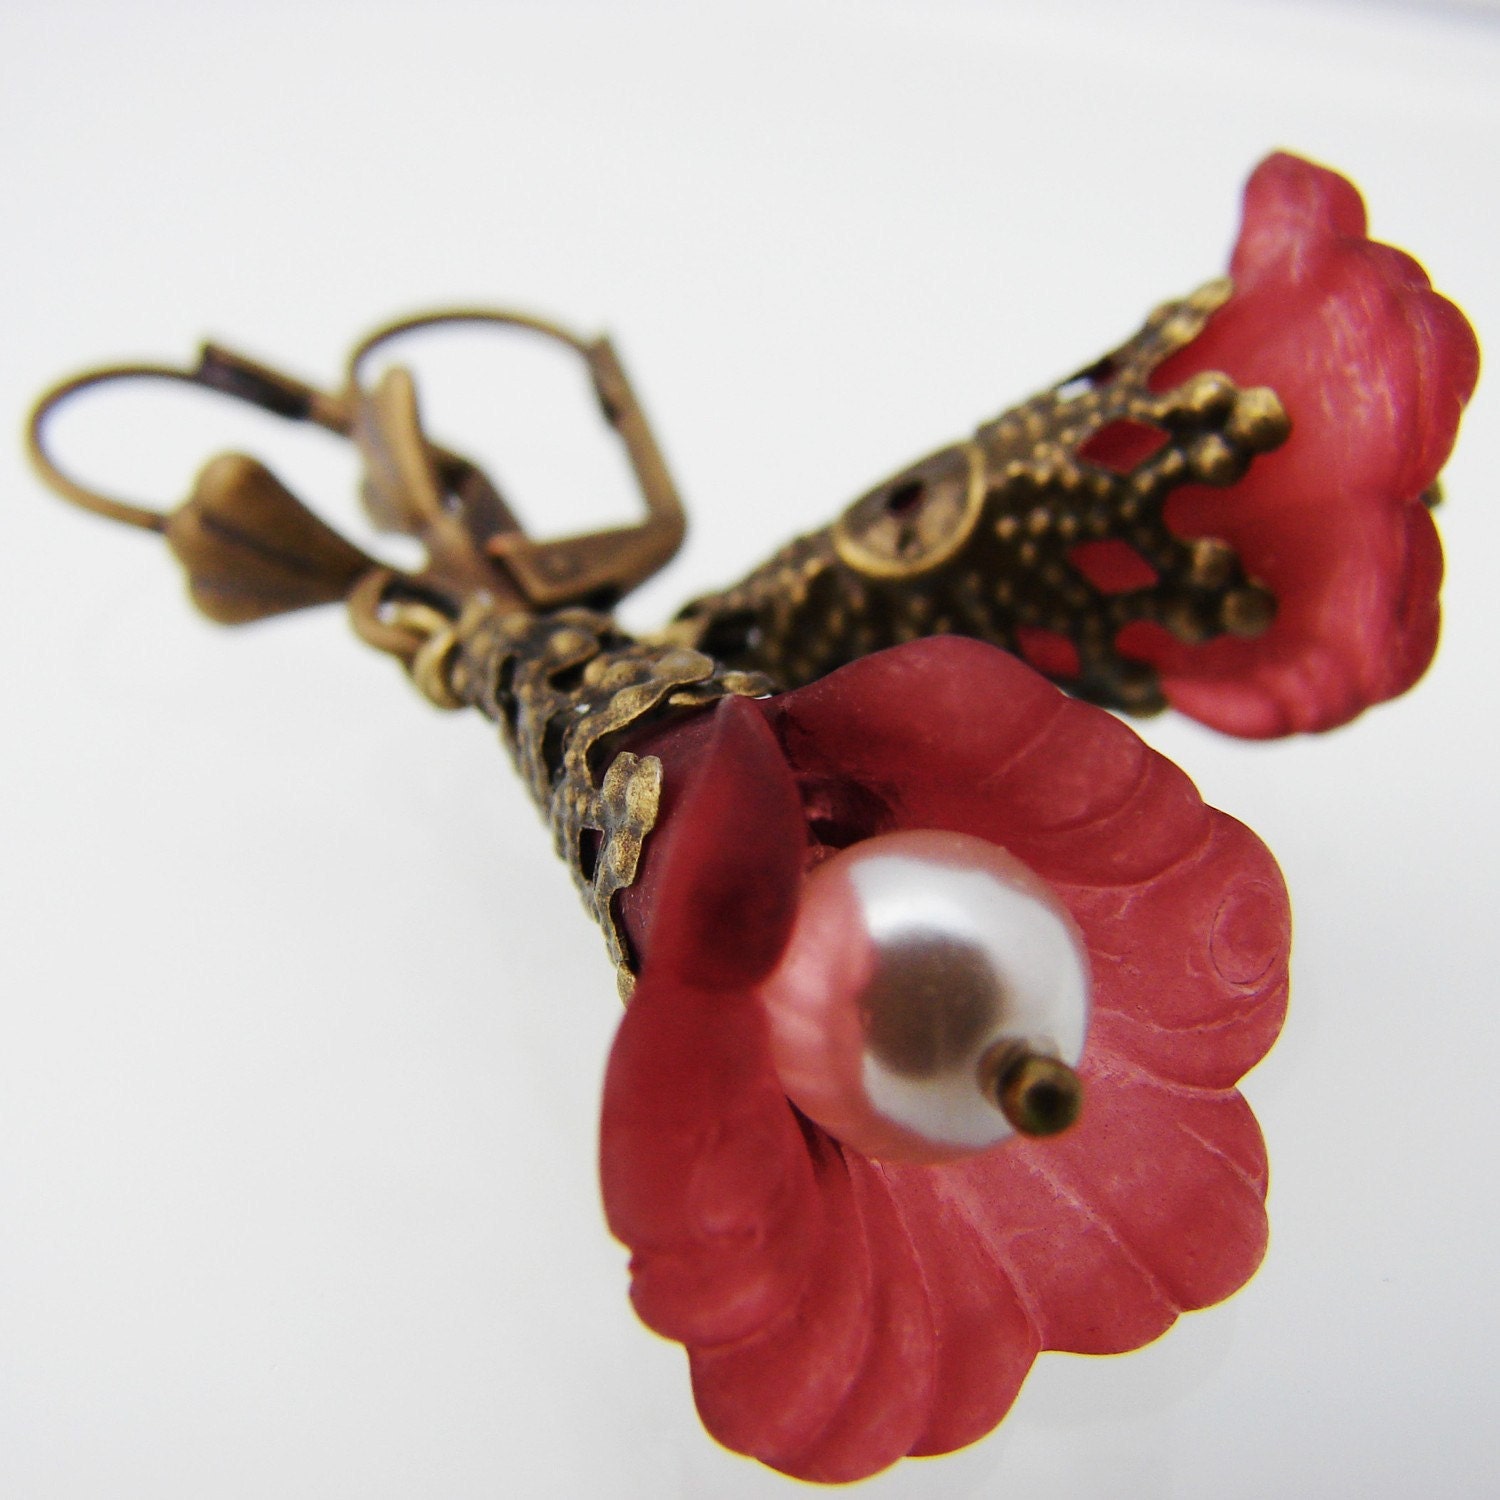 Merlot Lucite Flower Earrings on antiqued brass earwires